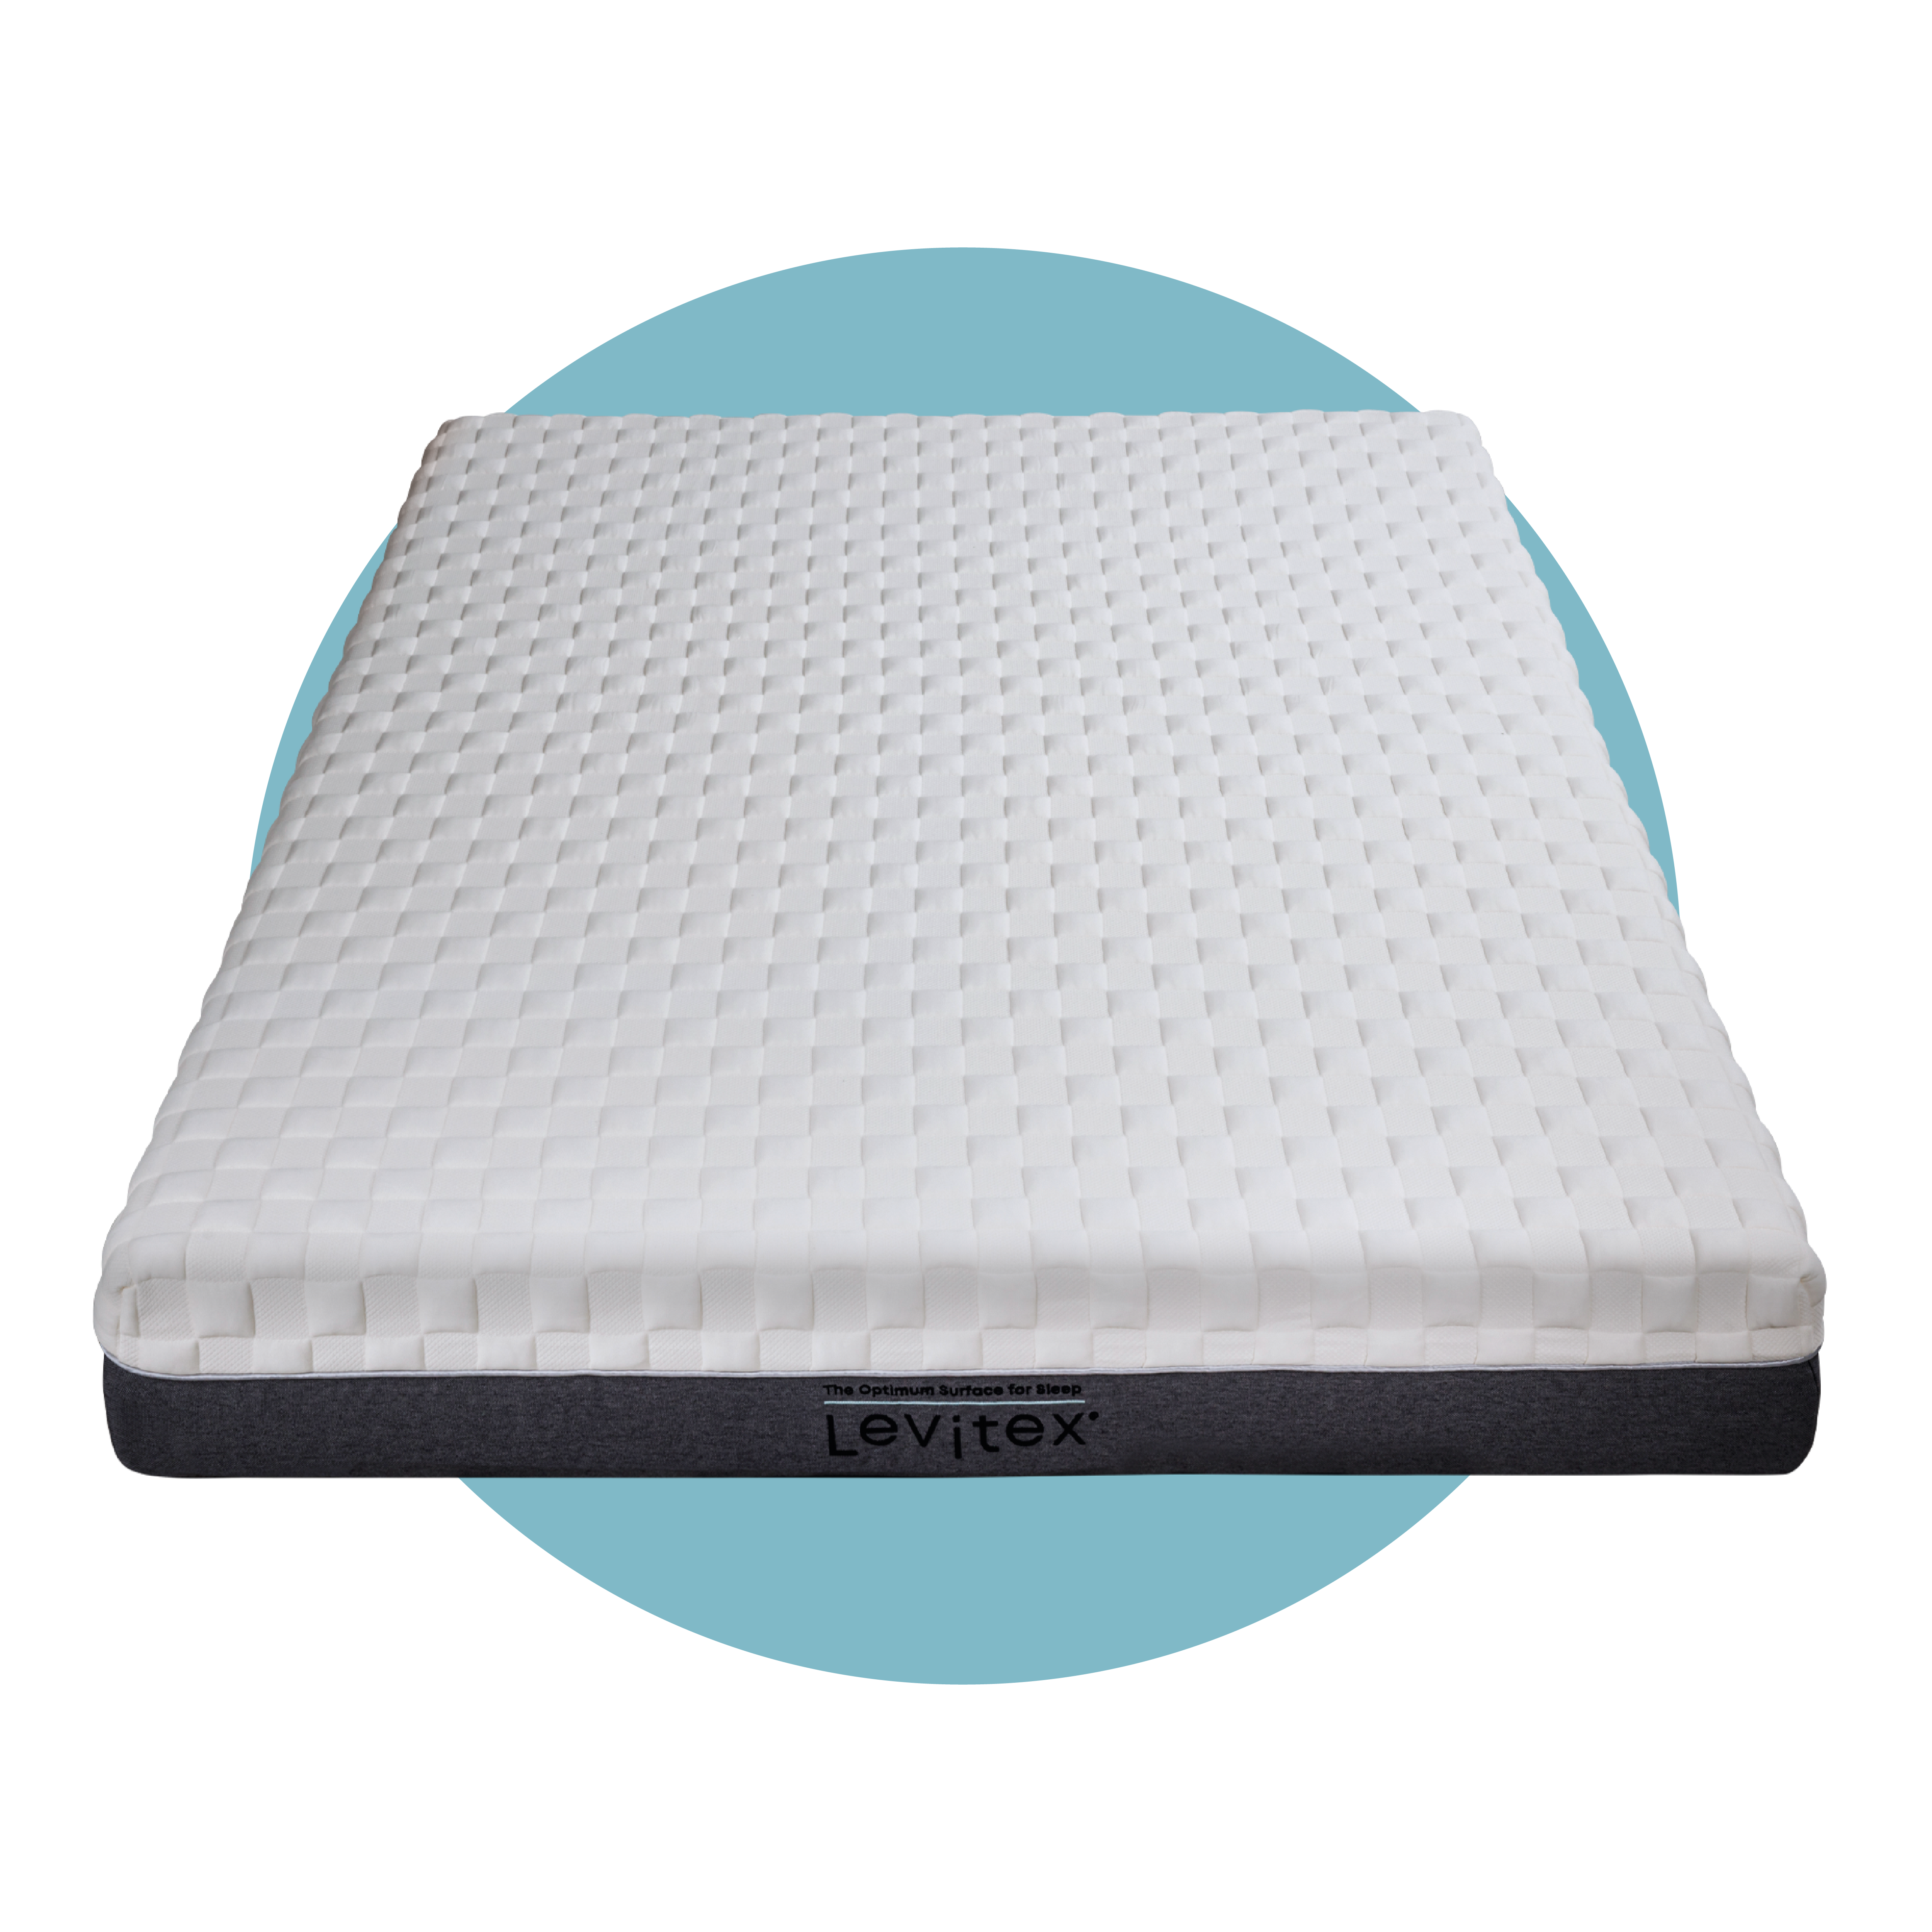 levitex mattress